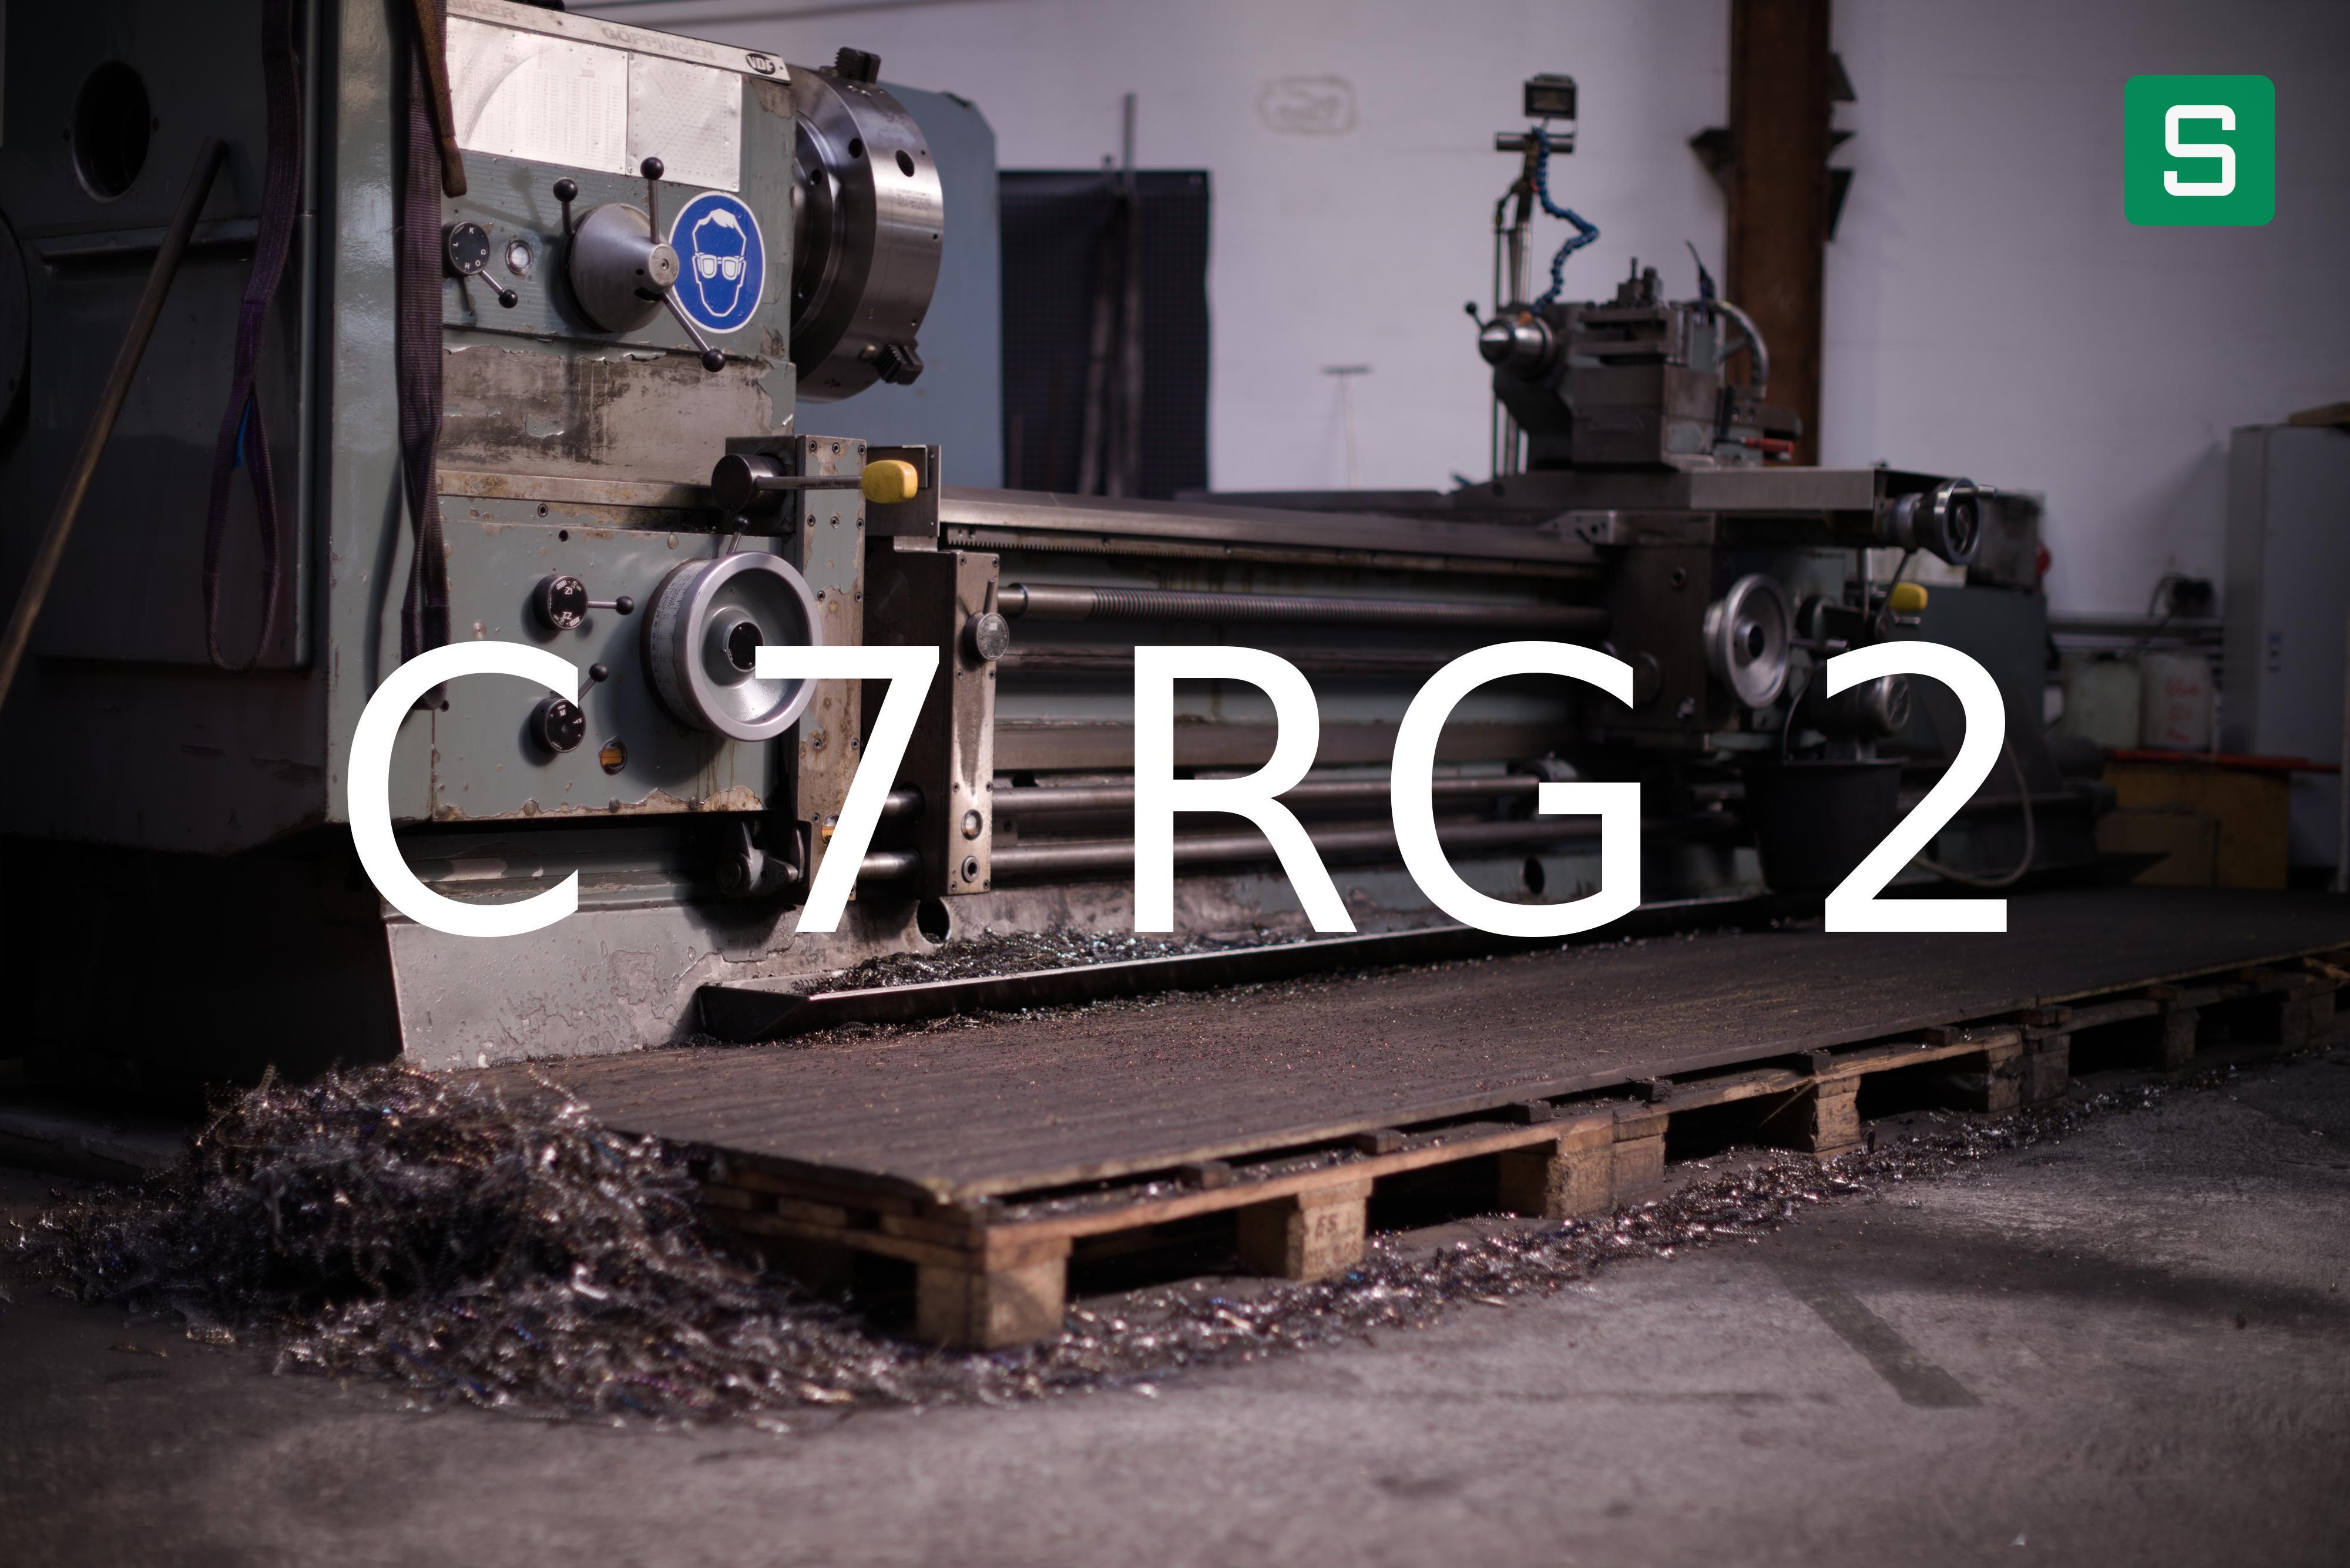 Steel Material: C 7 RG 2